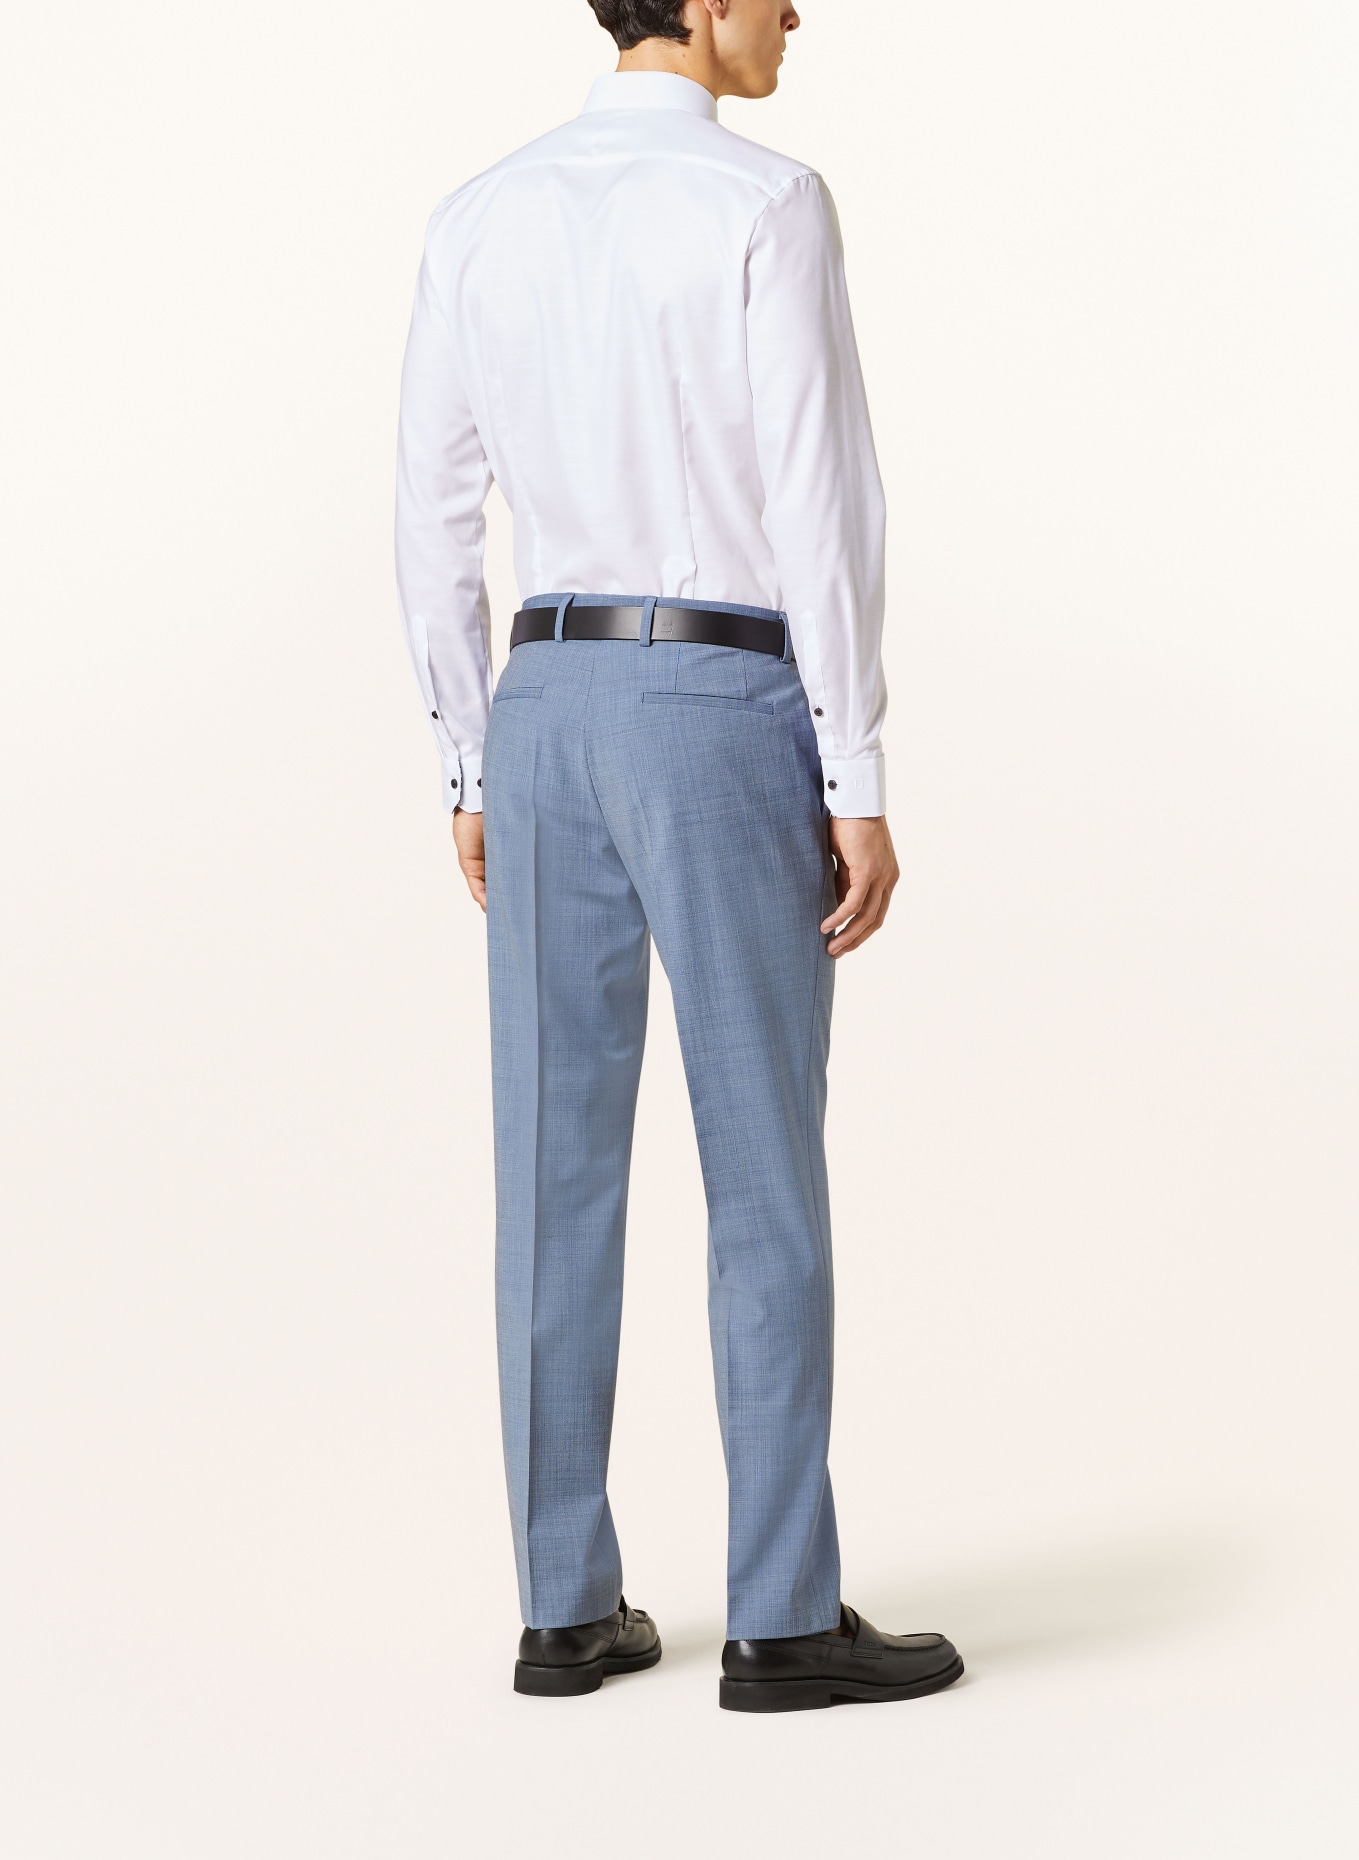 OLYMP Hemd Super Slim Fit, Farbe: WEISS (Bild 3)